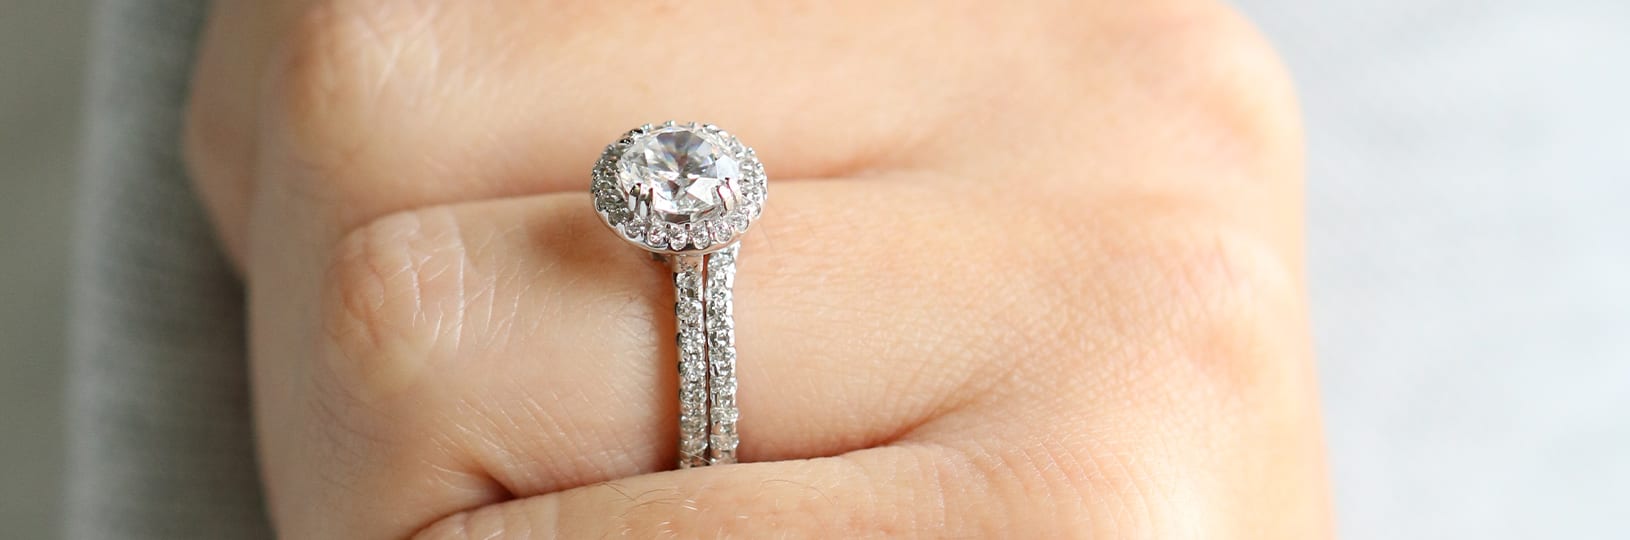 Wieg Dek de tafel hobby My Engagement Ring Is Too Small: Now What? | 12FIFTEEN Diamonds